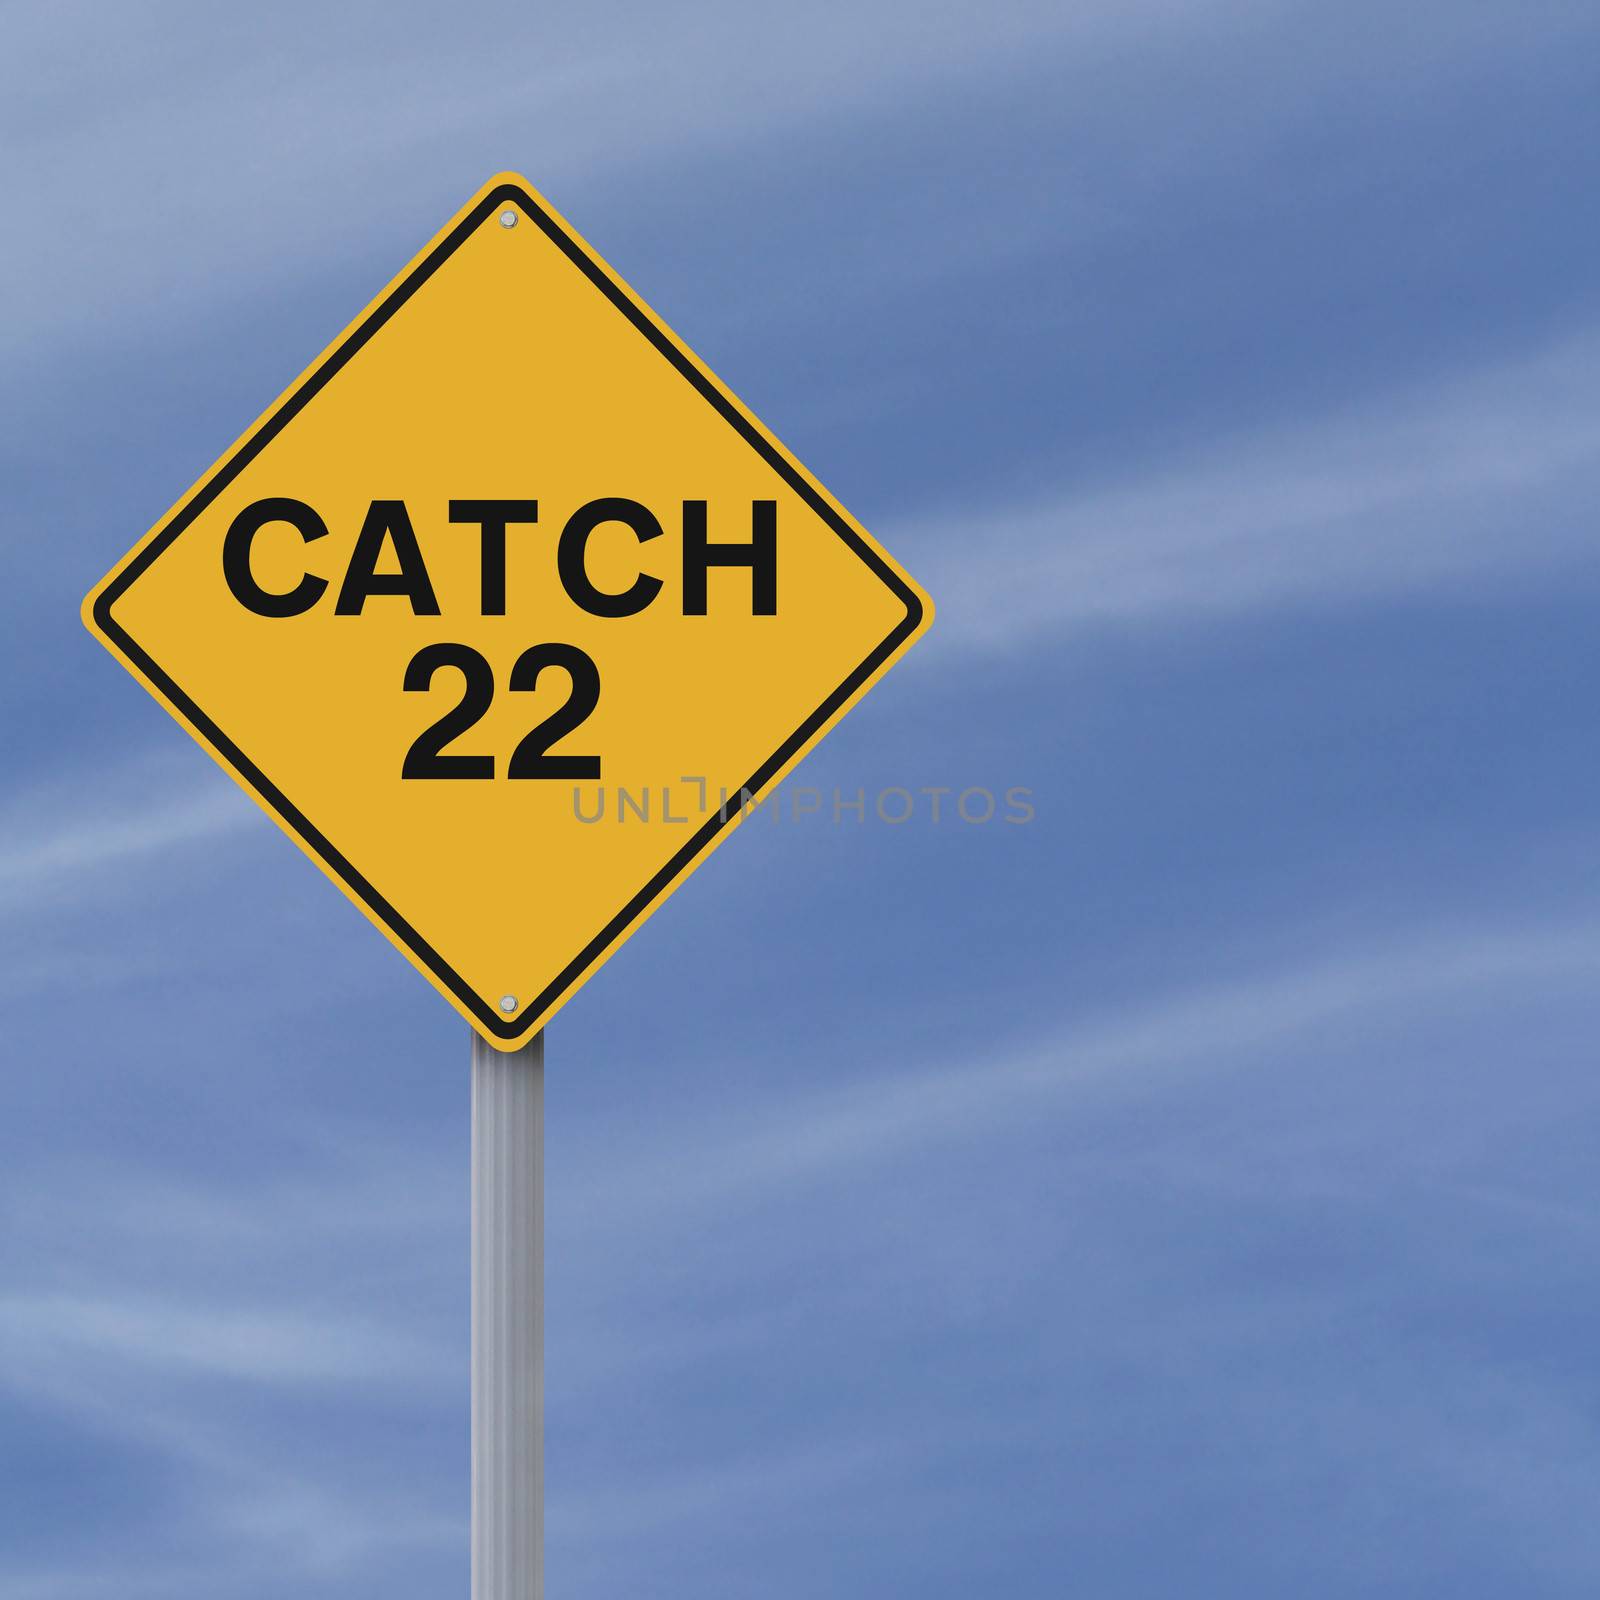 Catch 22 Ahead by rnl